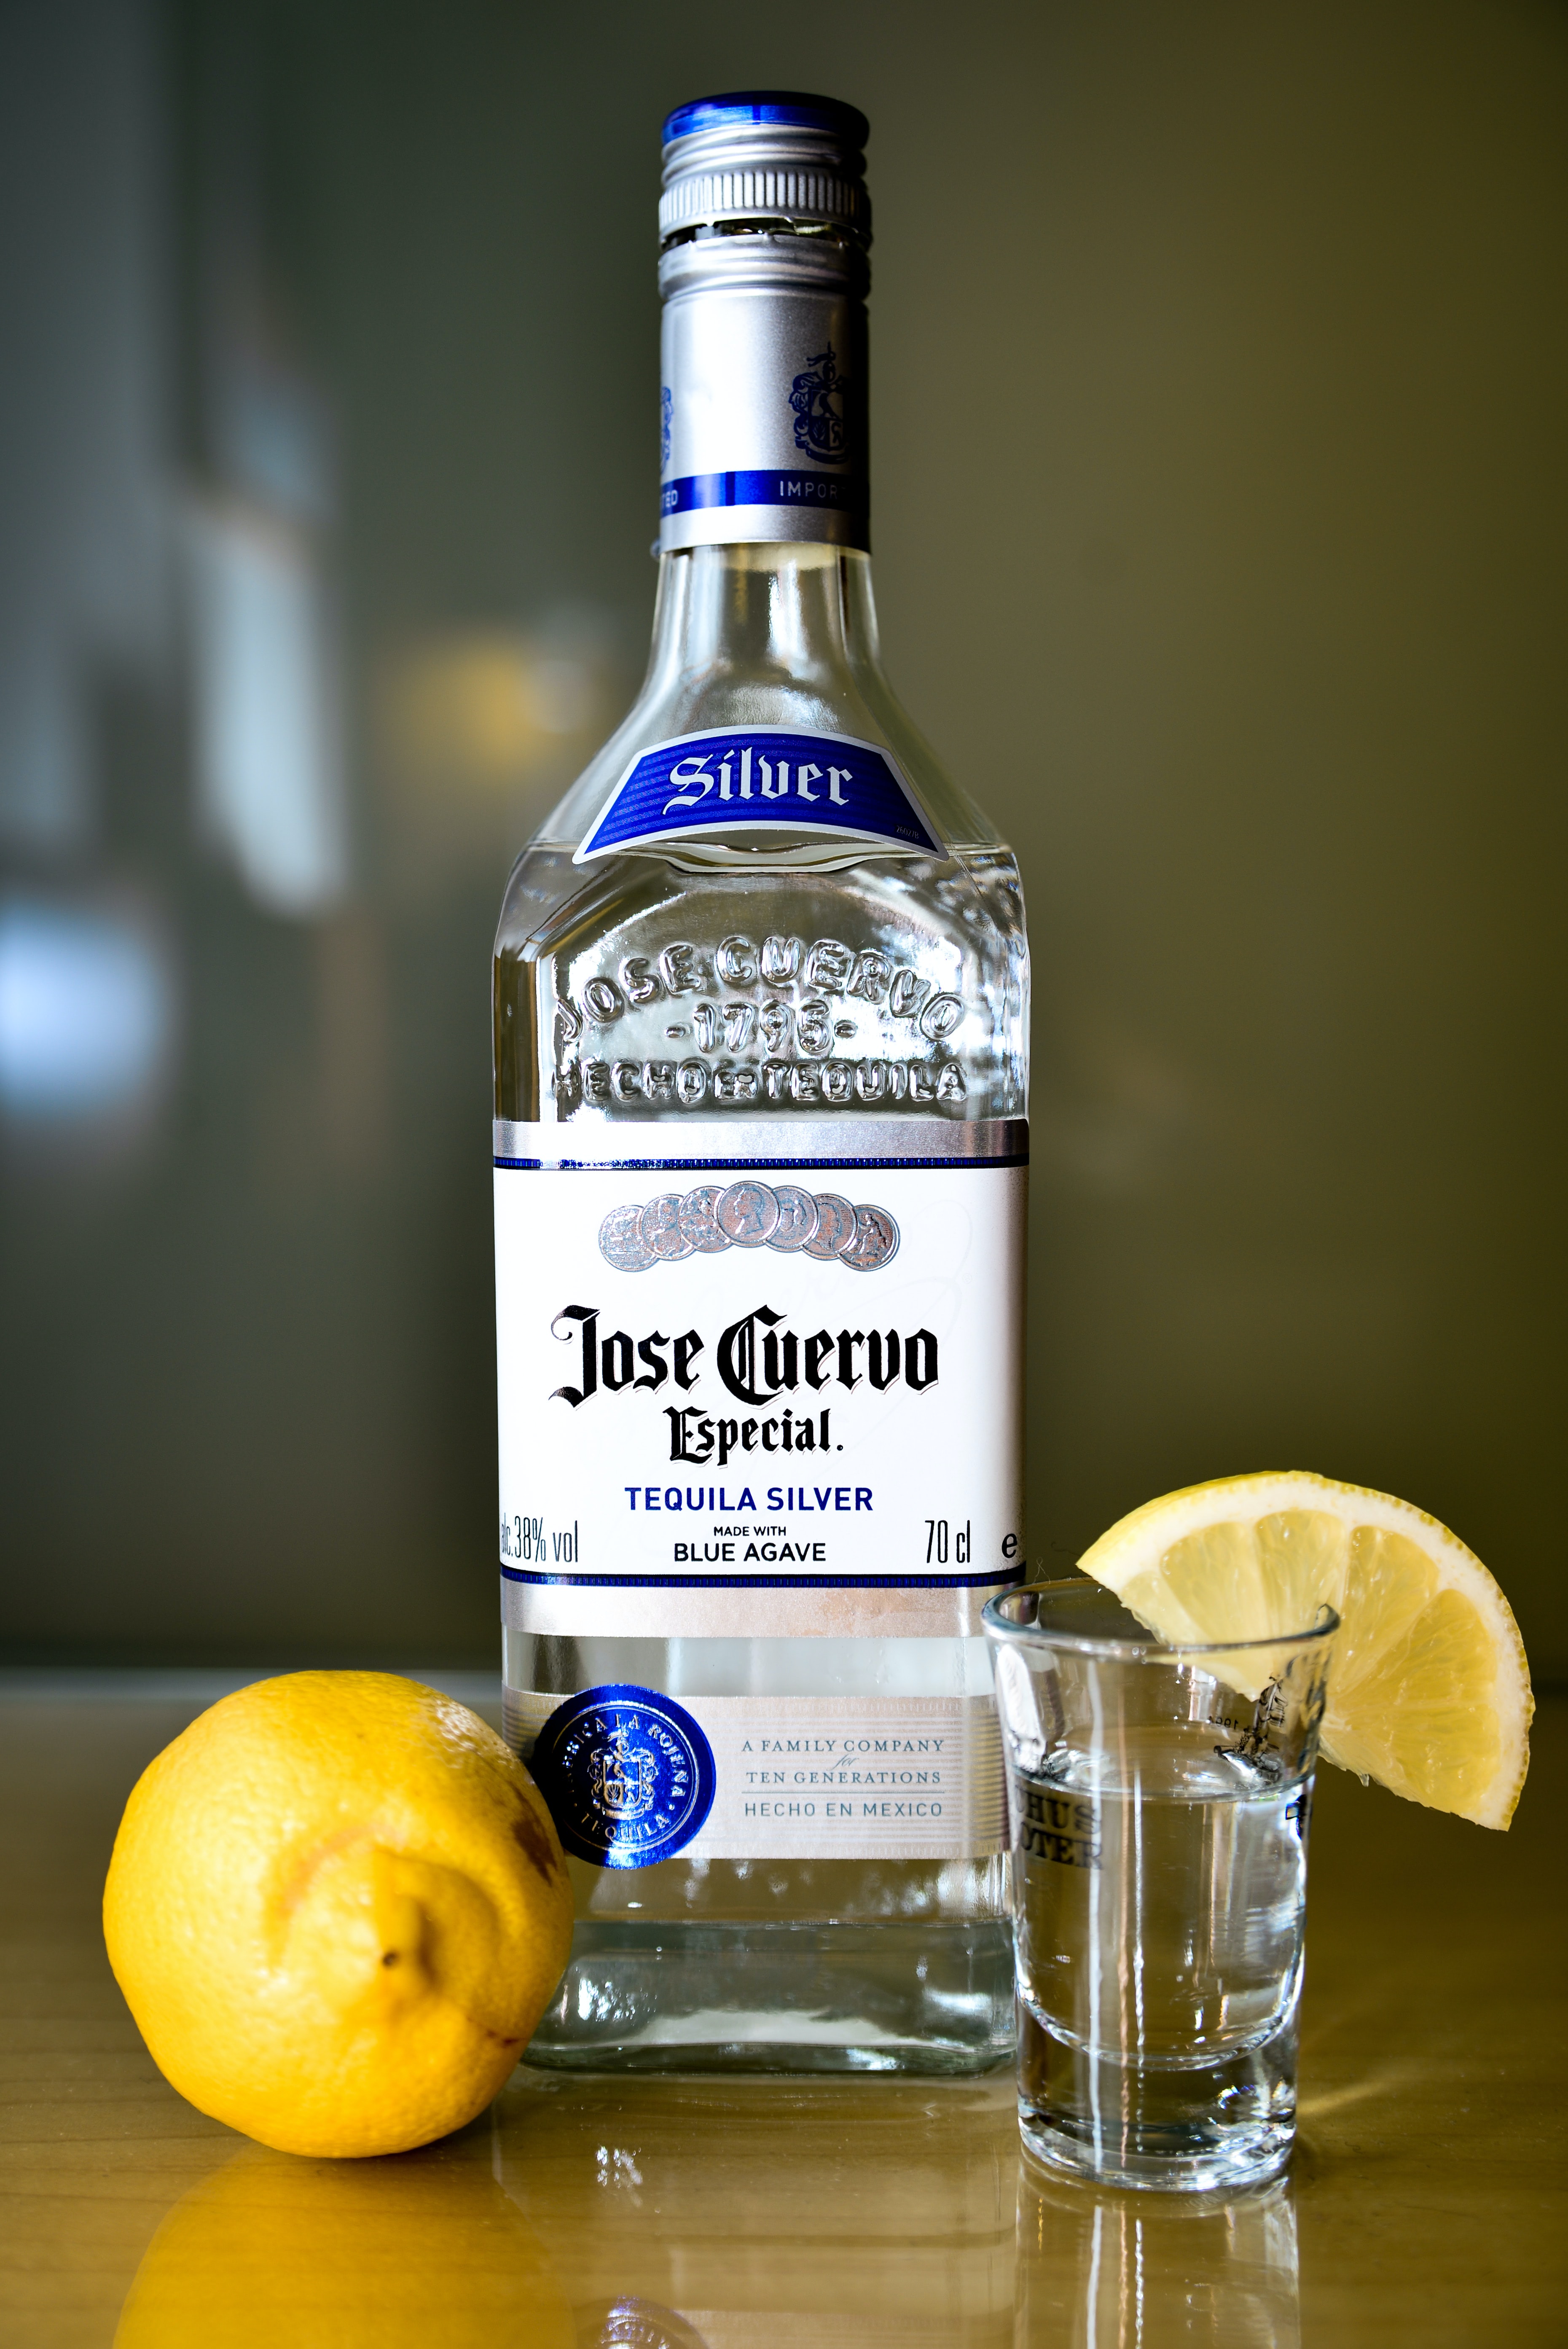 Jose Cuero Tequila Silver © Fidel Fernando 